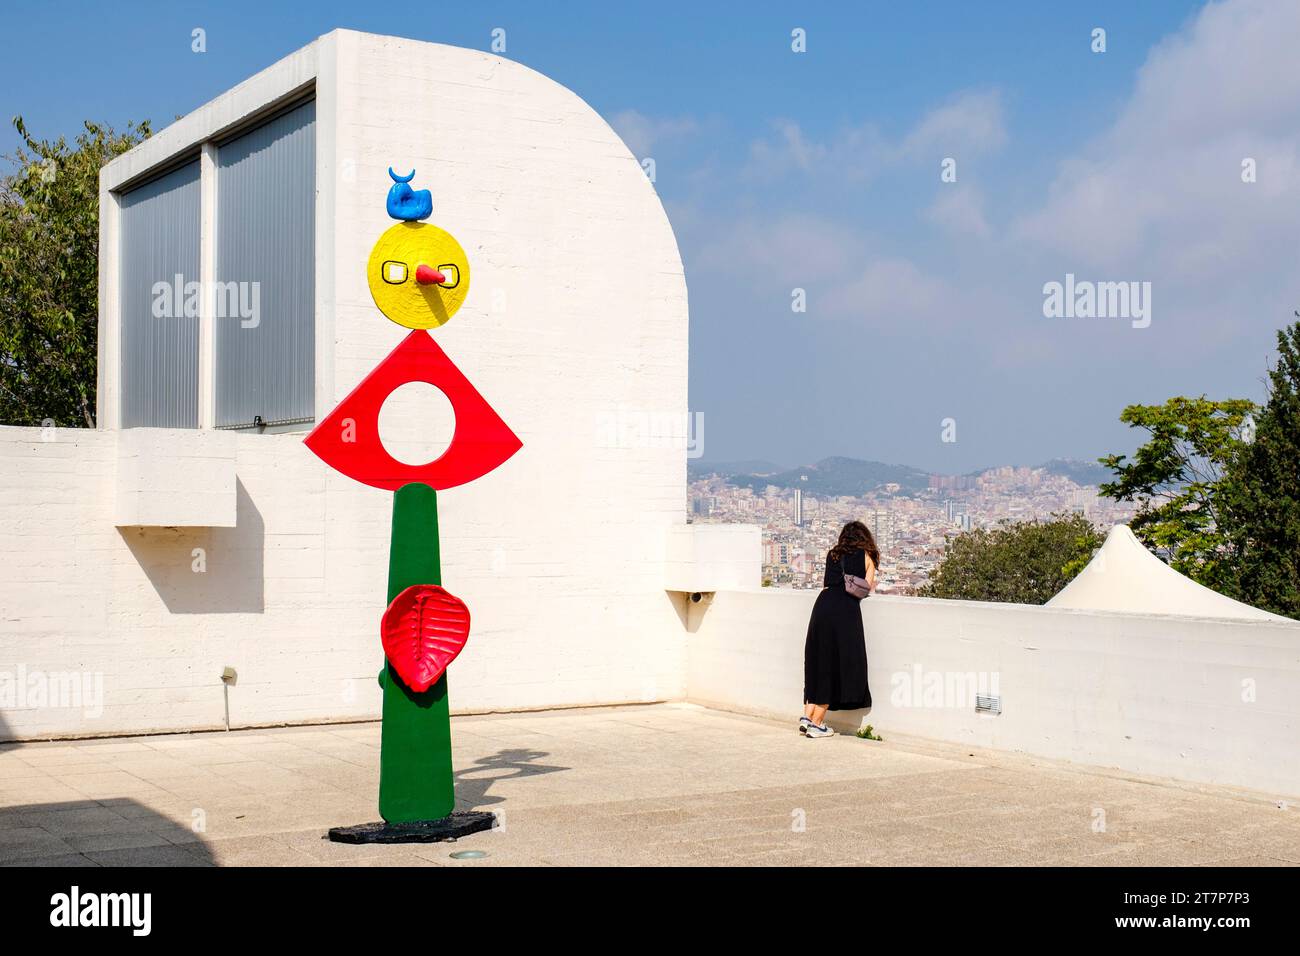 Joan Miró Skulptur die Streichelei eines Vogels, Fundació Joan Miró, Joan Miro Foundation, Montjuic, Barcelona, Katalonien, Spanien Stockfoto